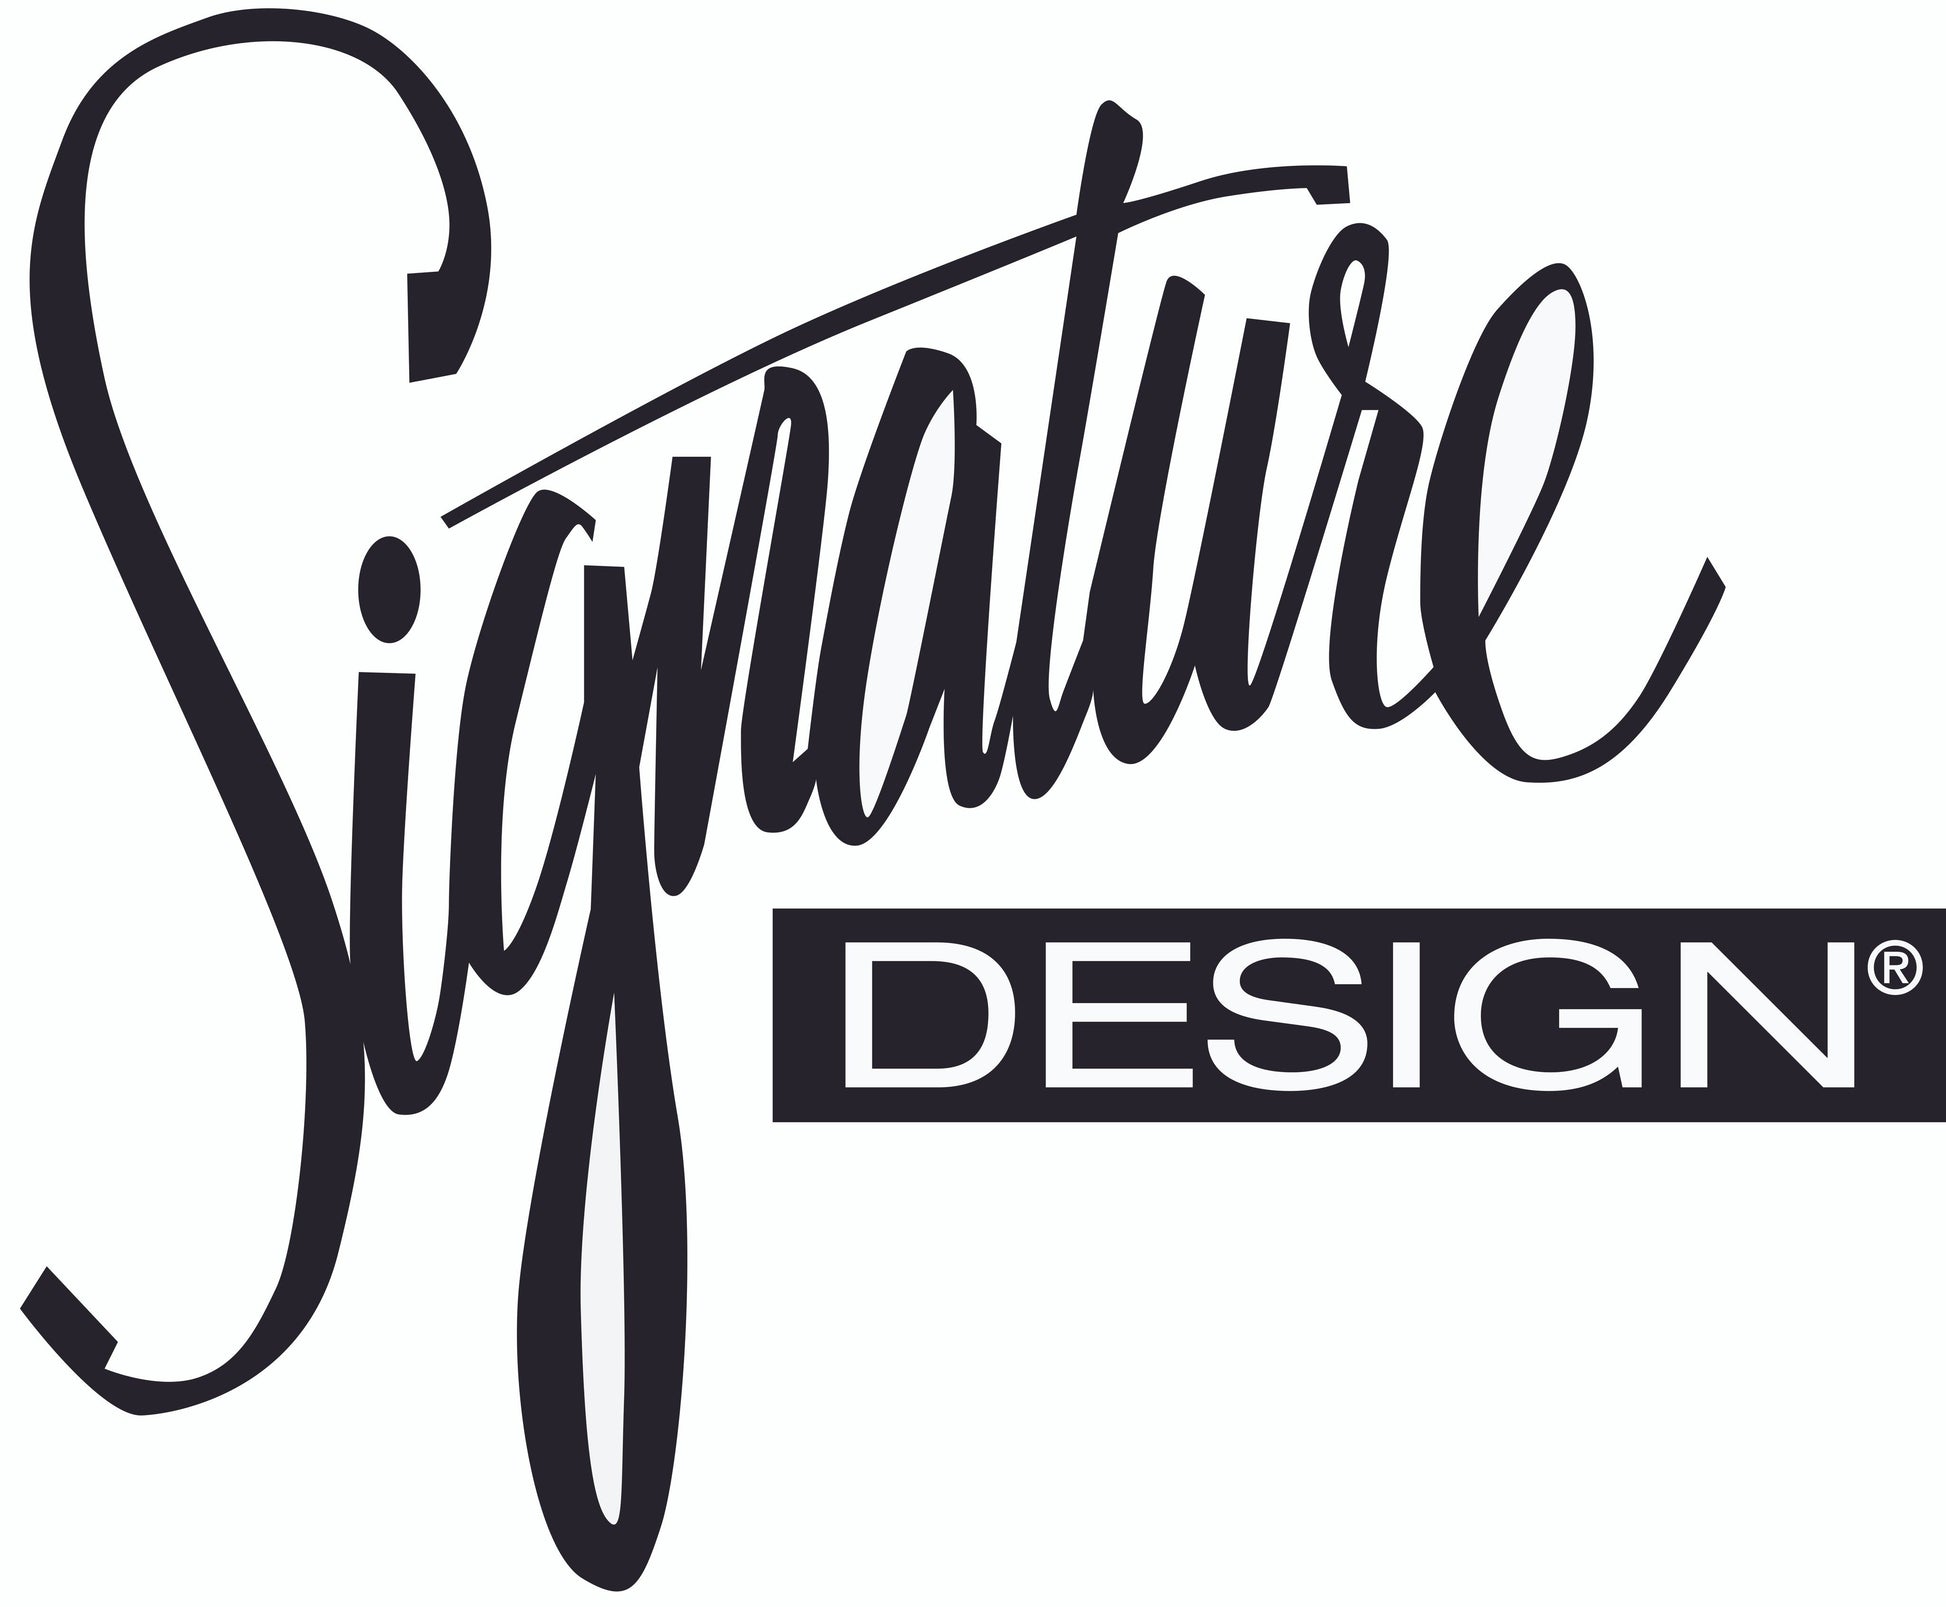 Phantasm Swivel Accent Chair Signature Design by Ashley®